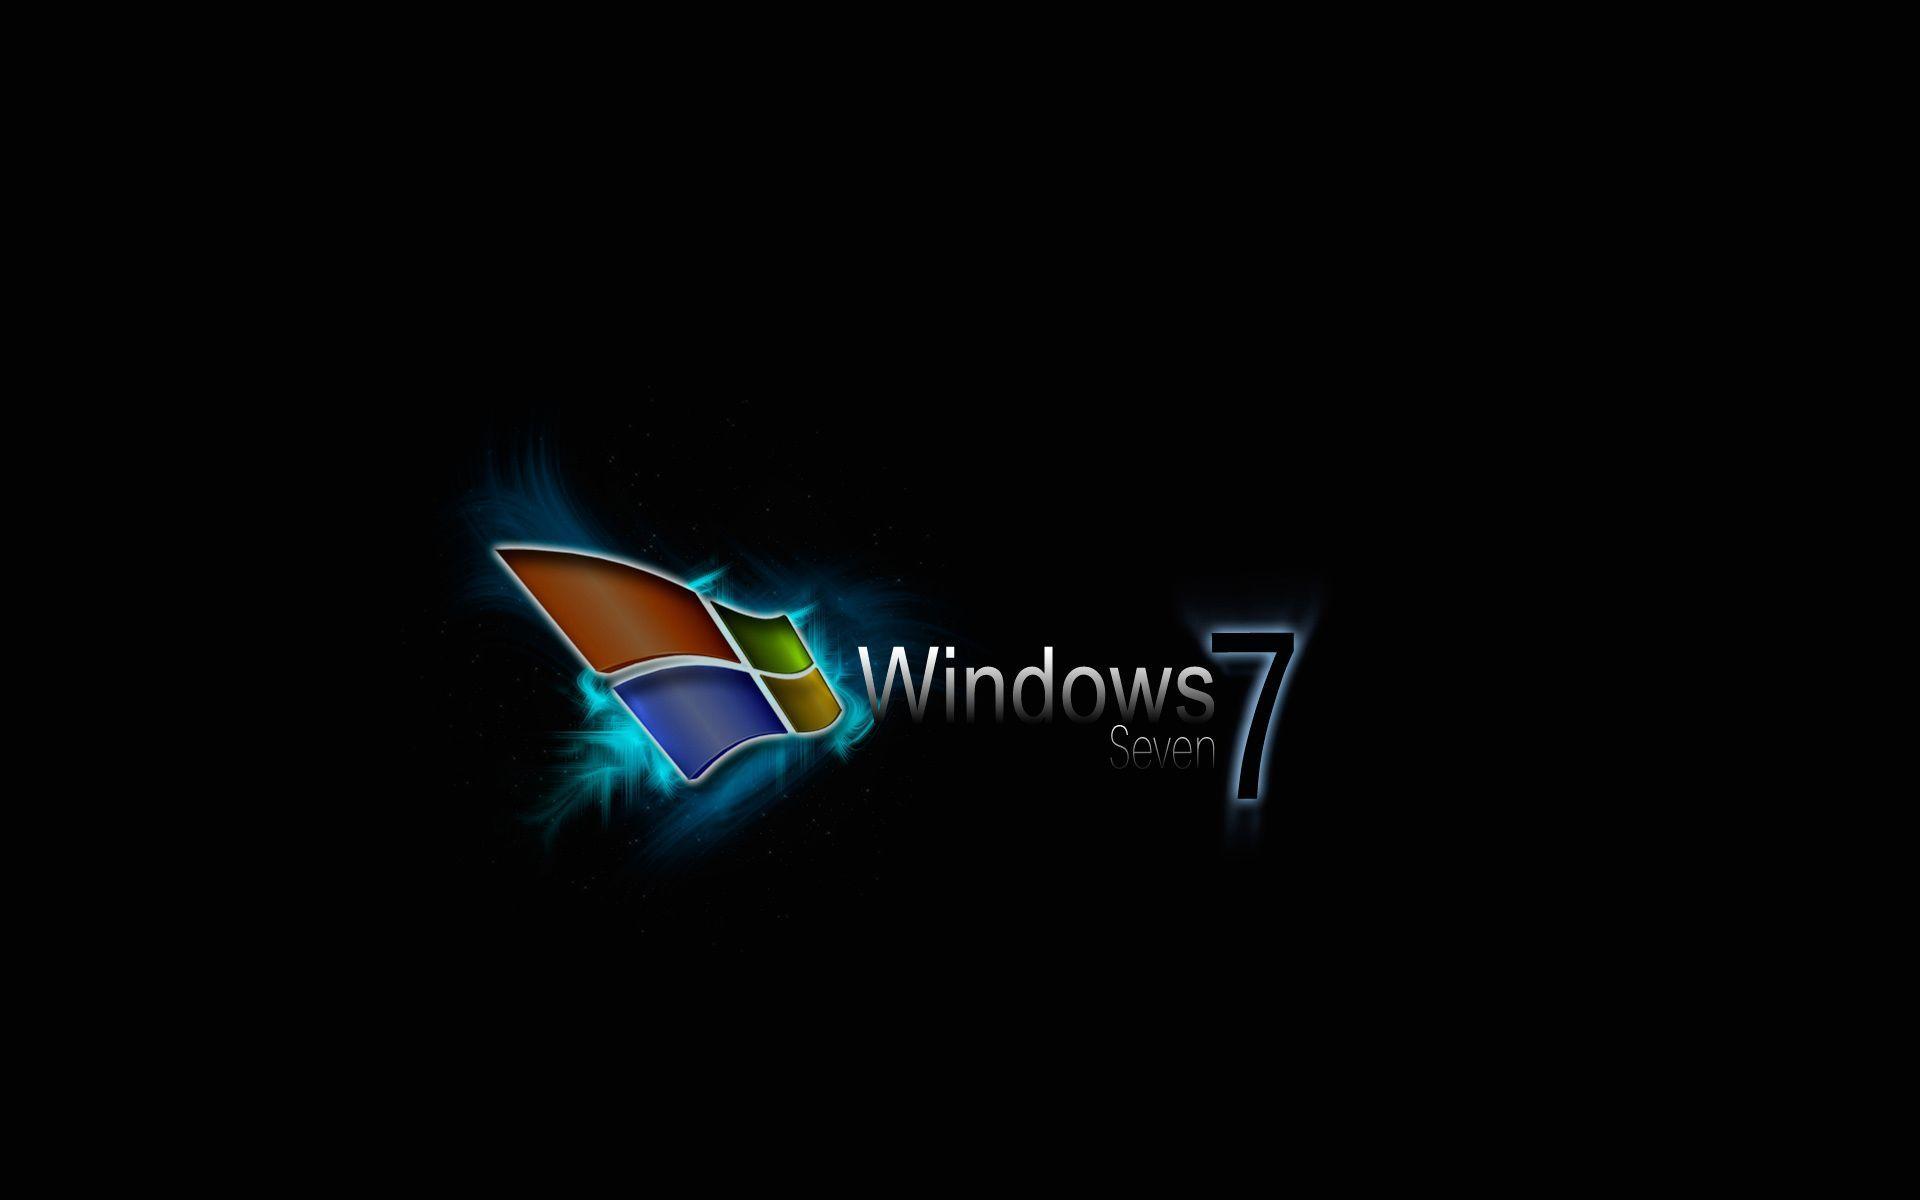 Microsoft Windows 7 wallpaper